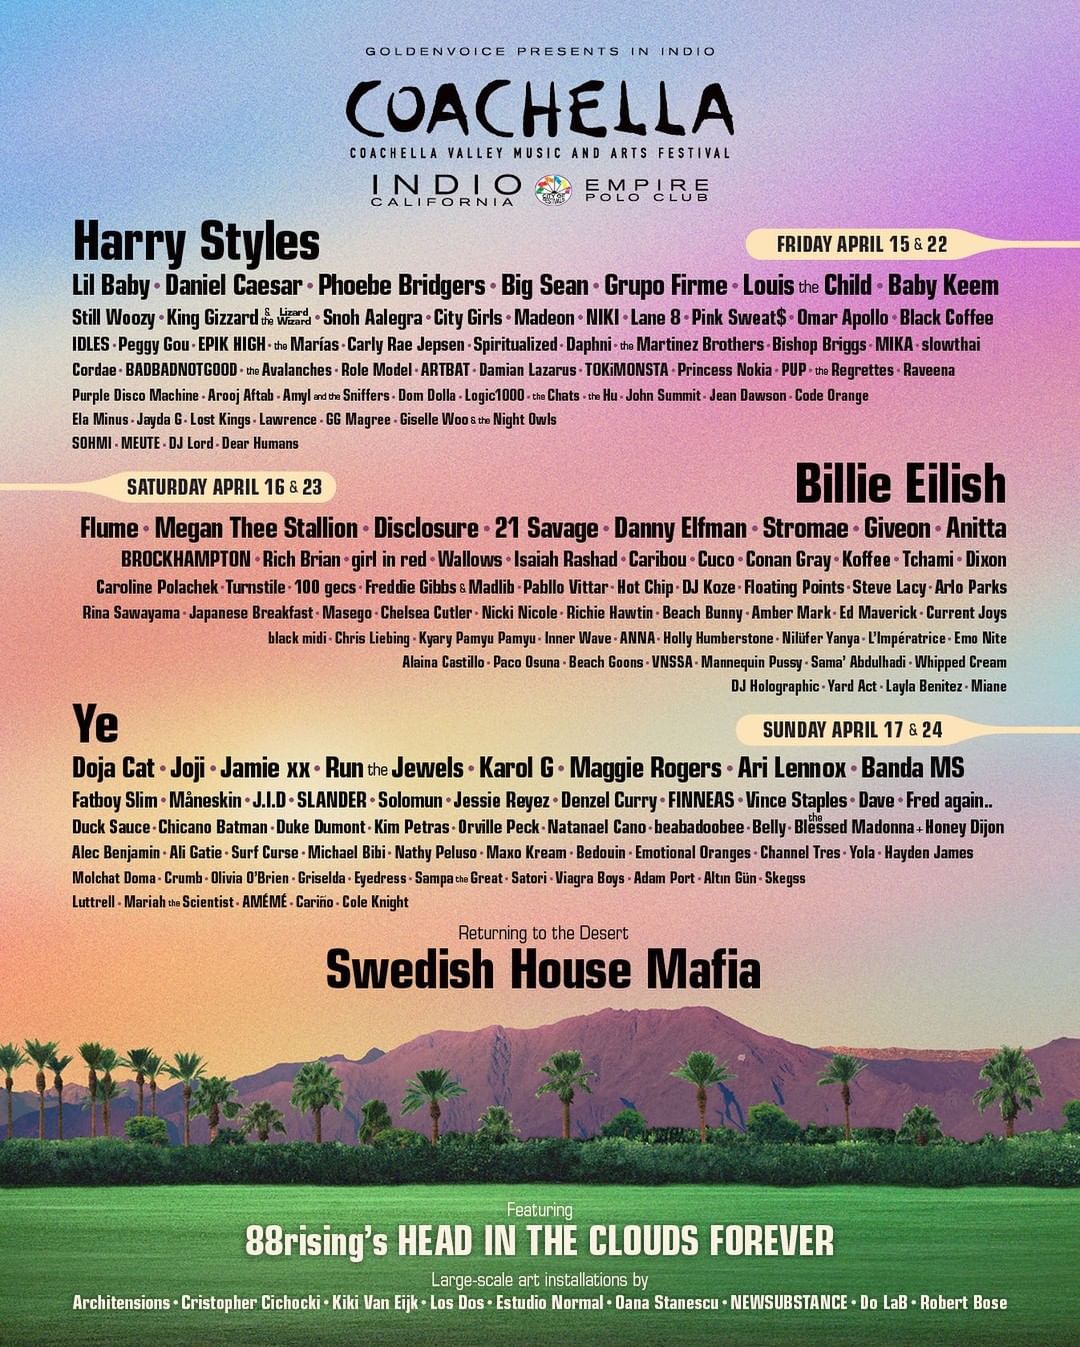 Billie Eilish, Harry Styles, and Ye are headlining Coachella 2022